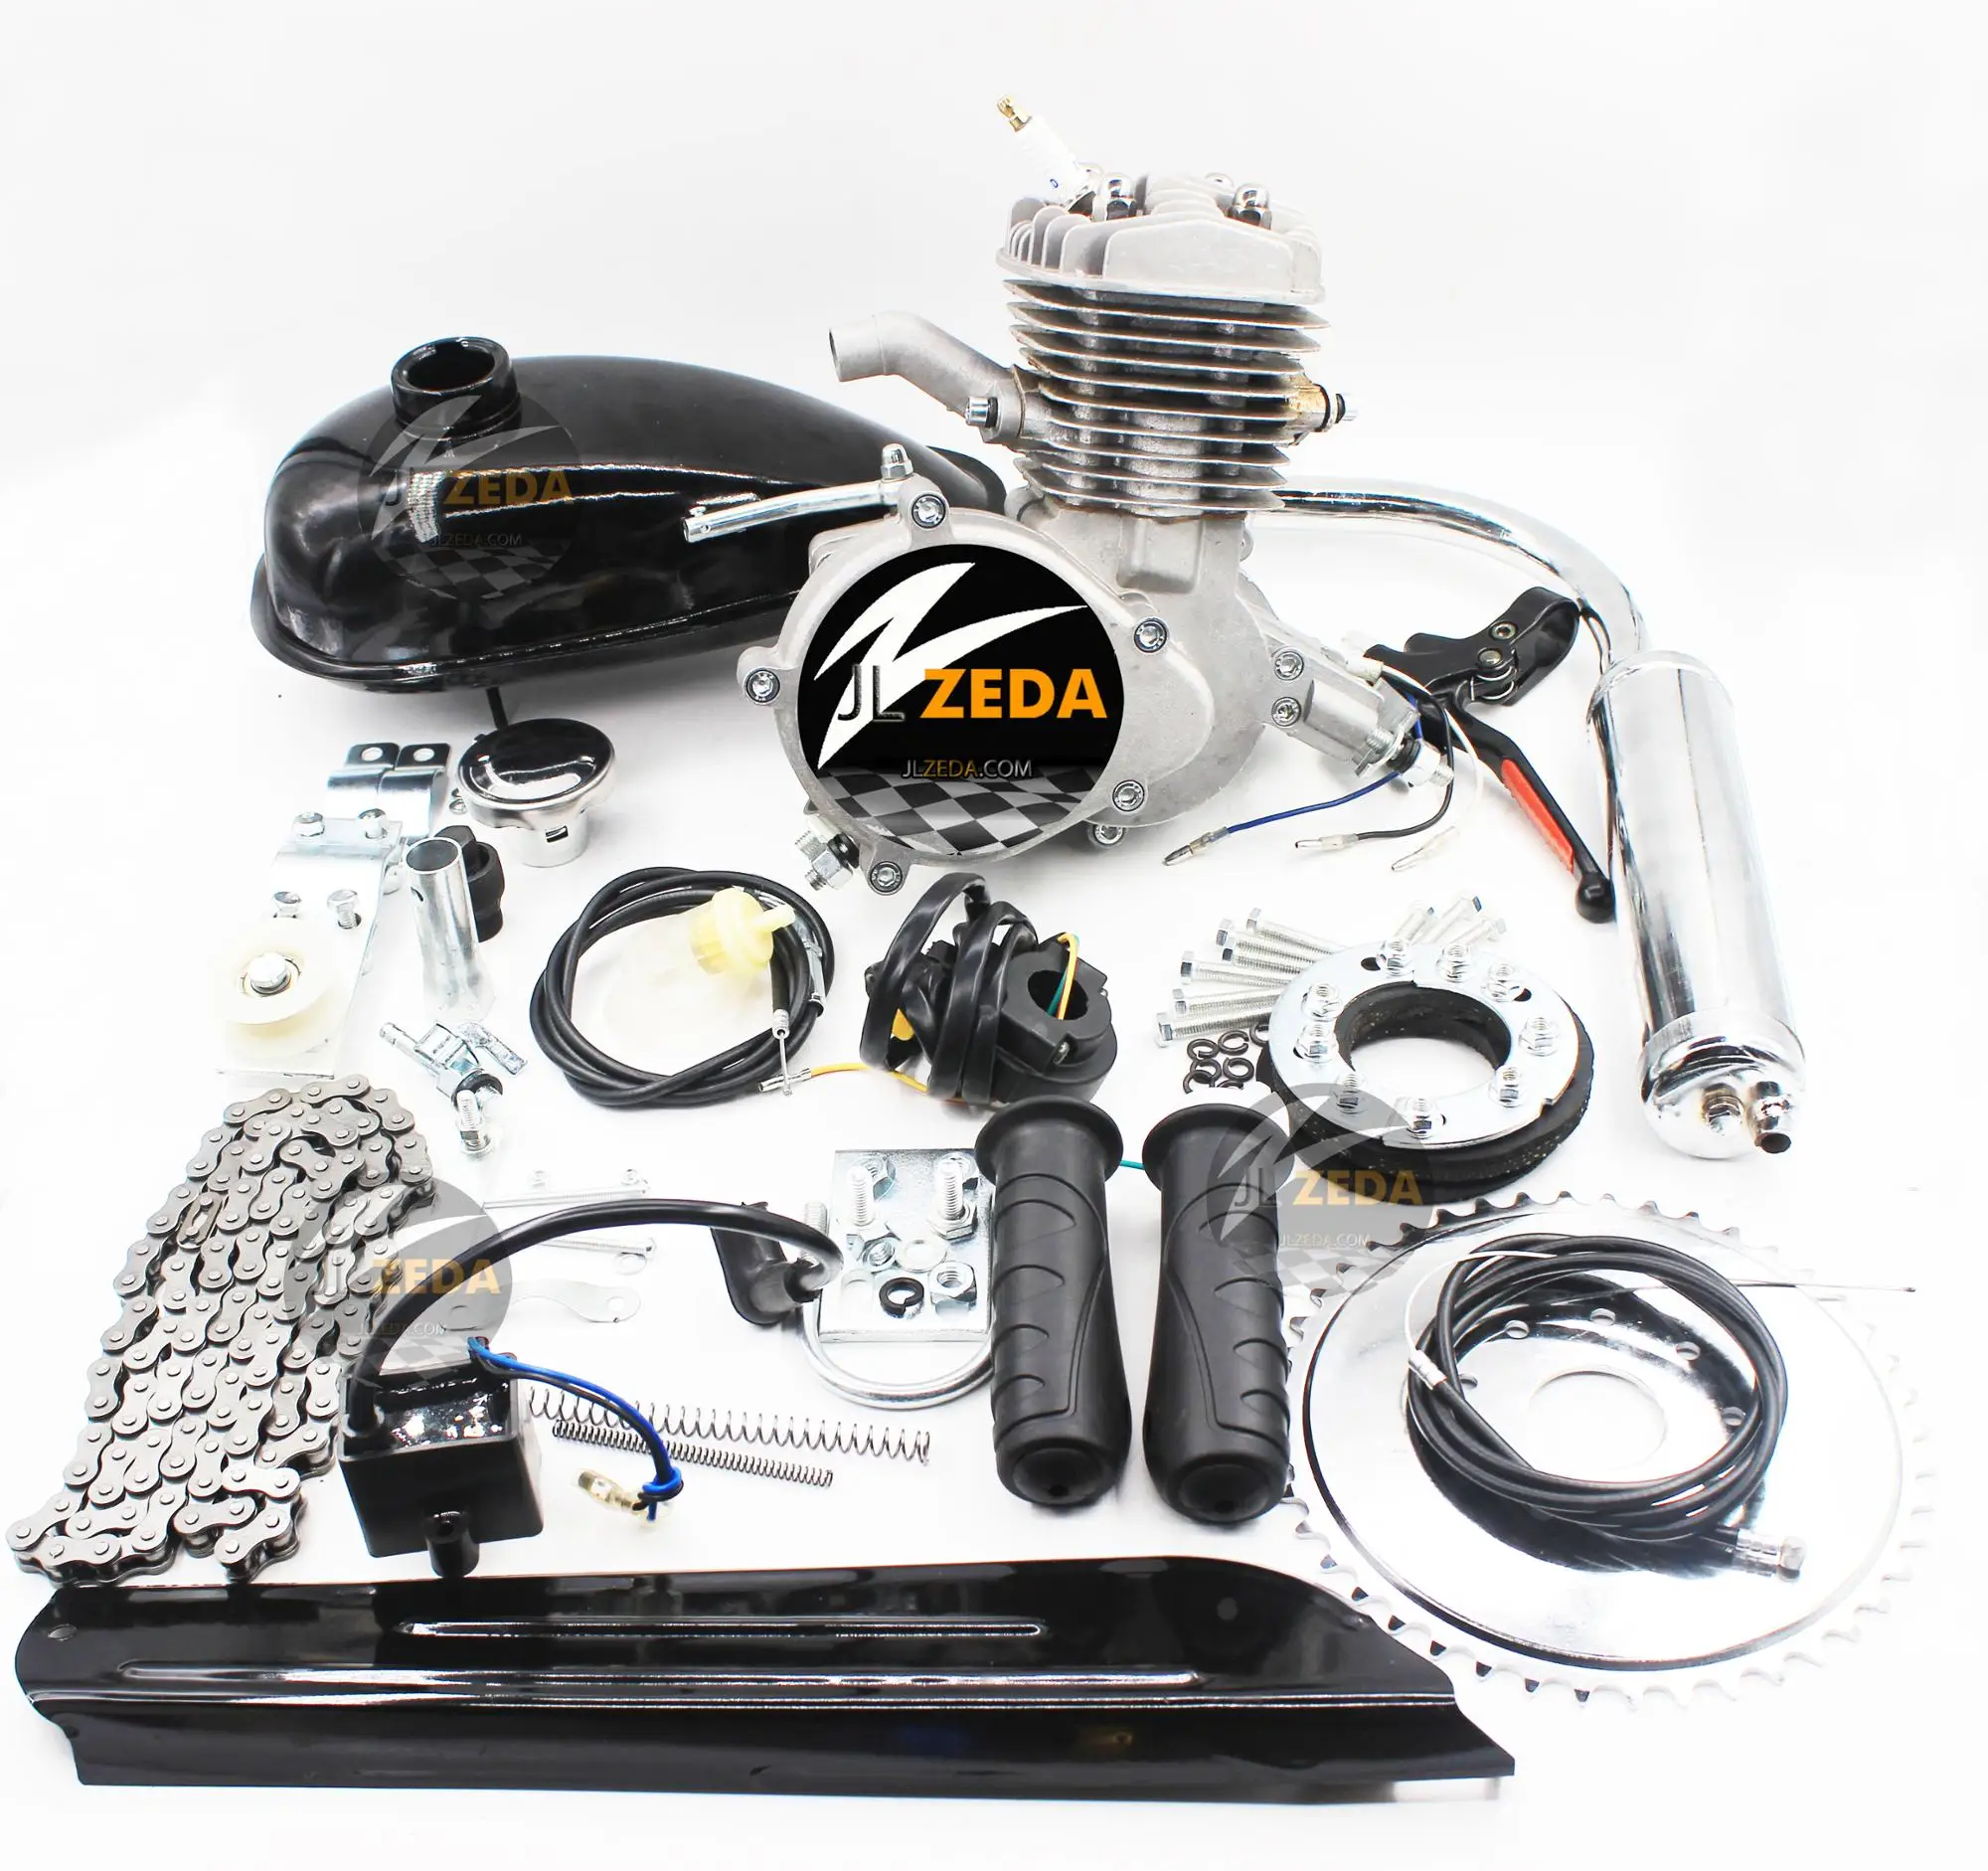 2 stroke bike engine kit